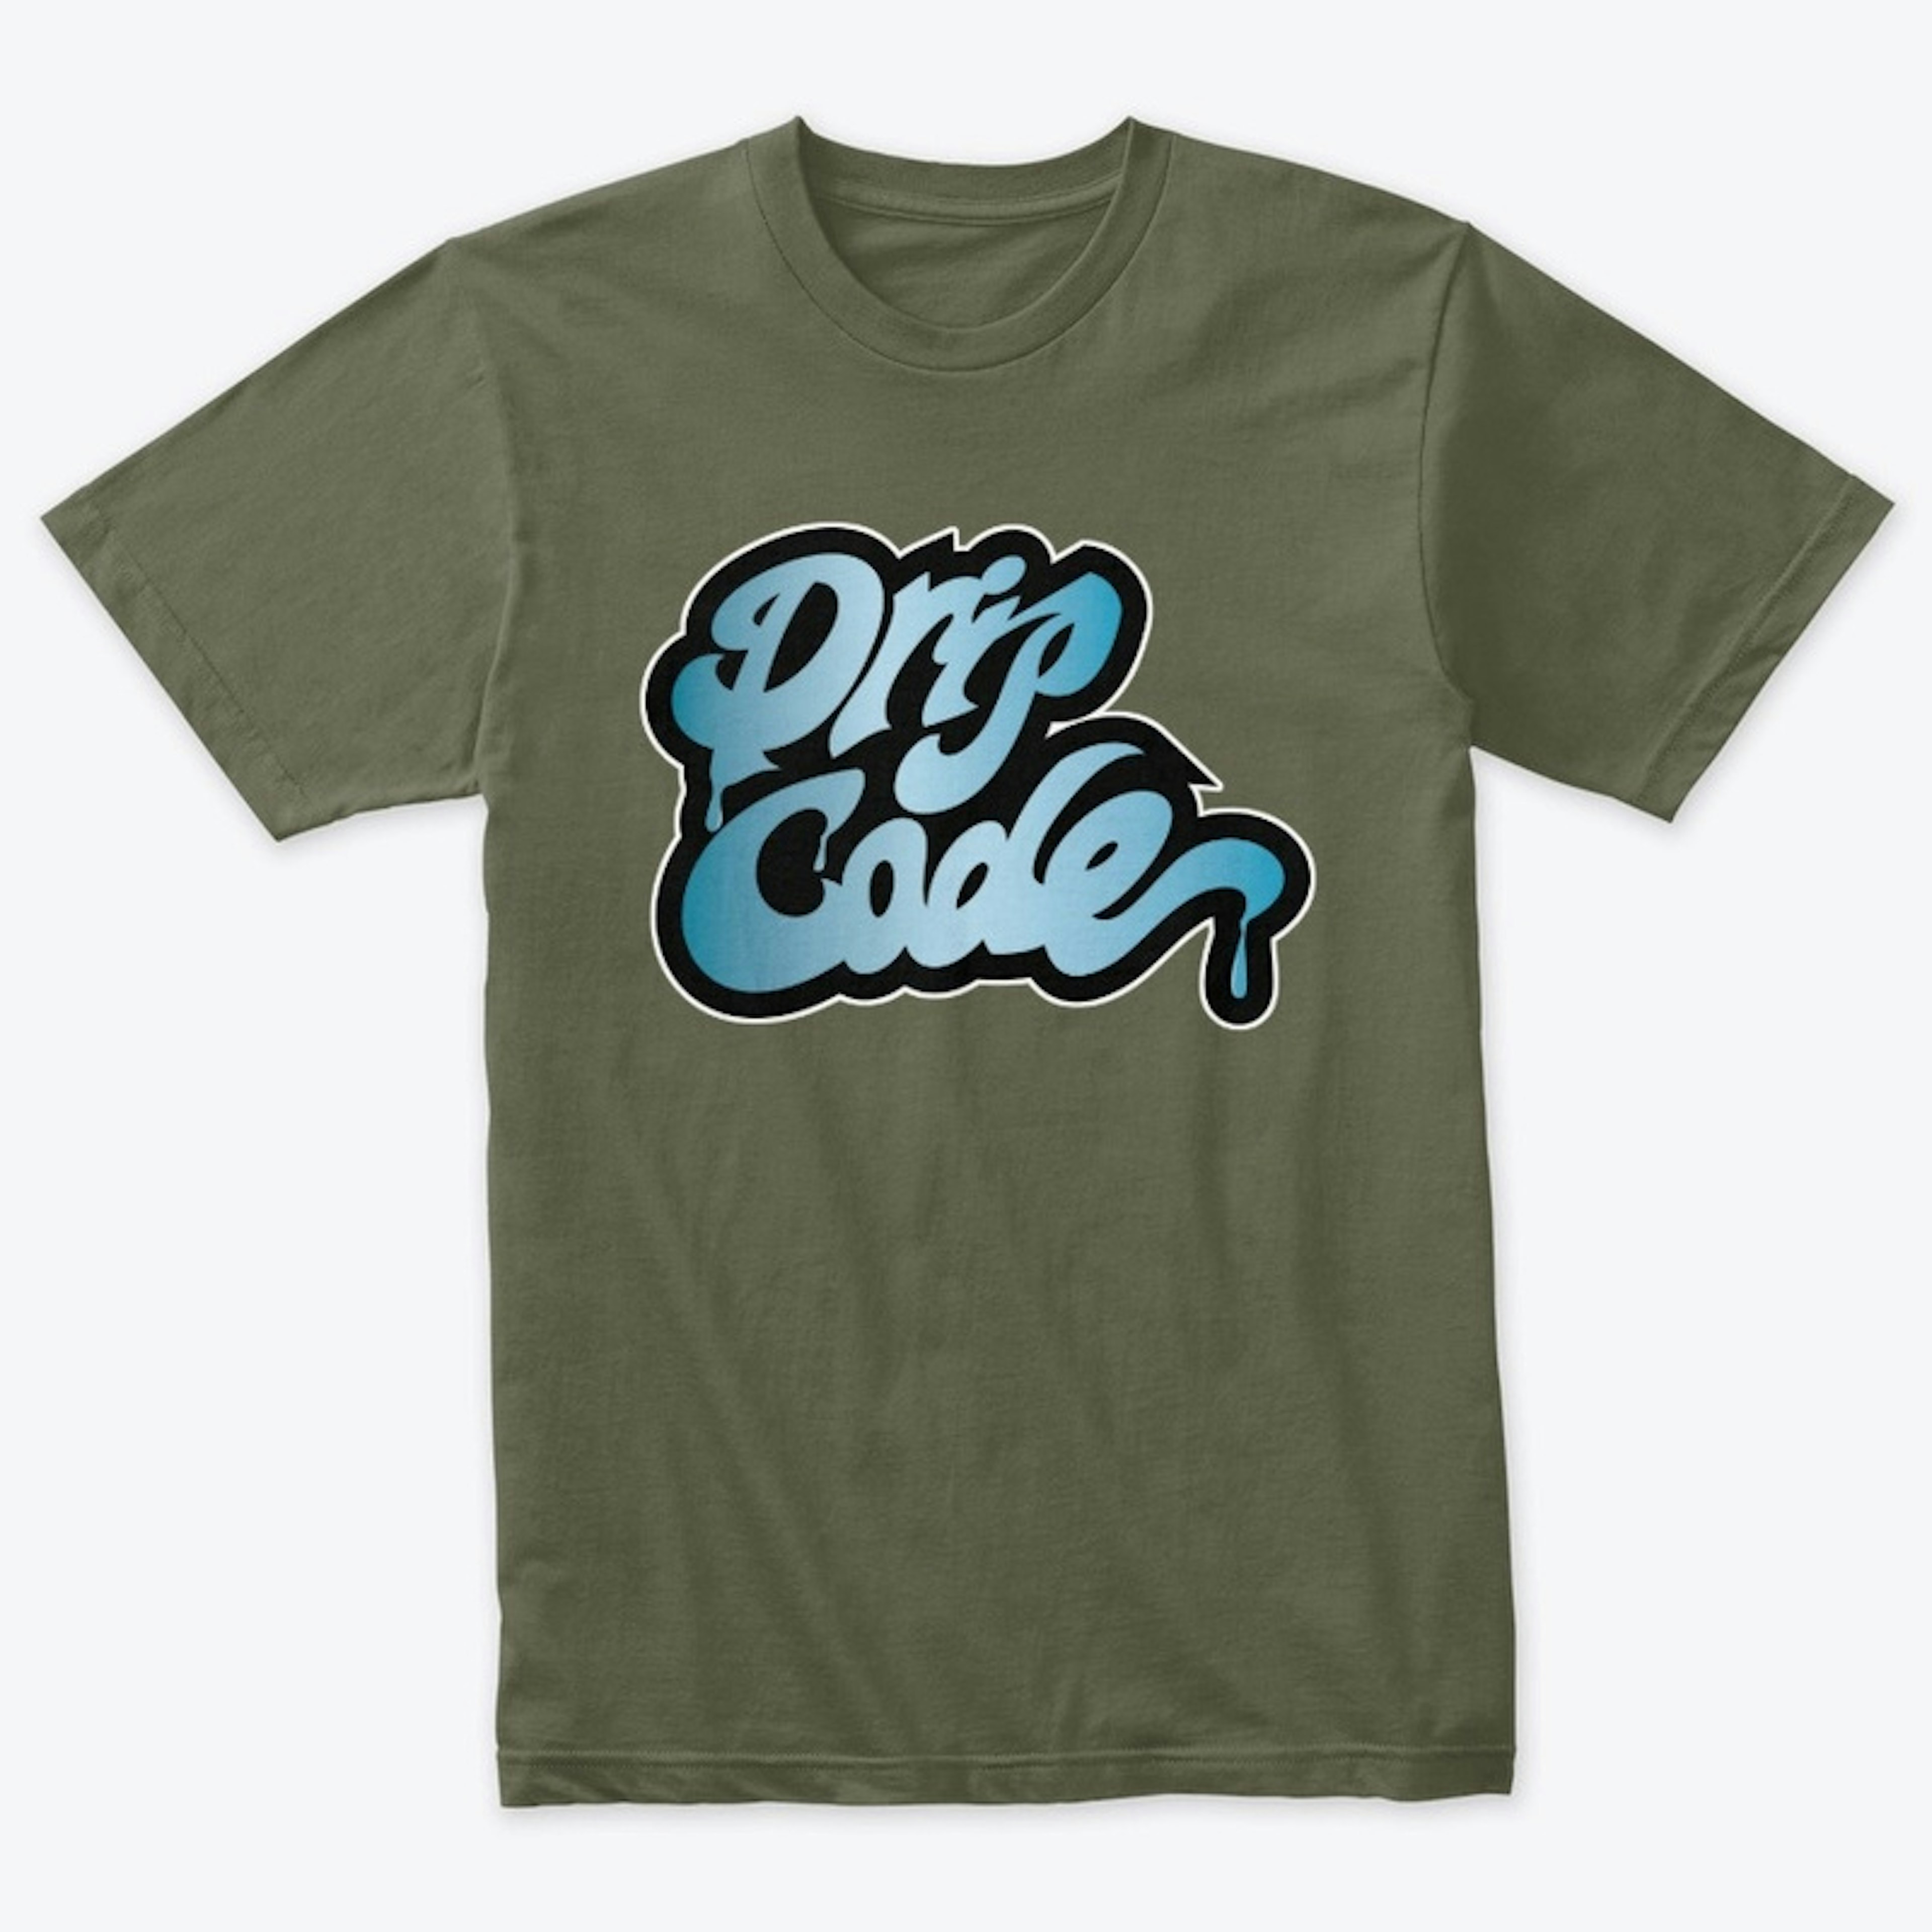 DripCode - Shirt Collection